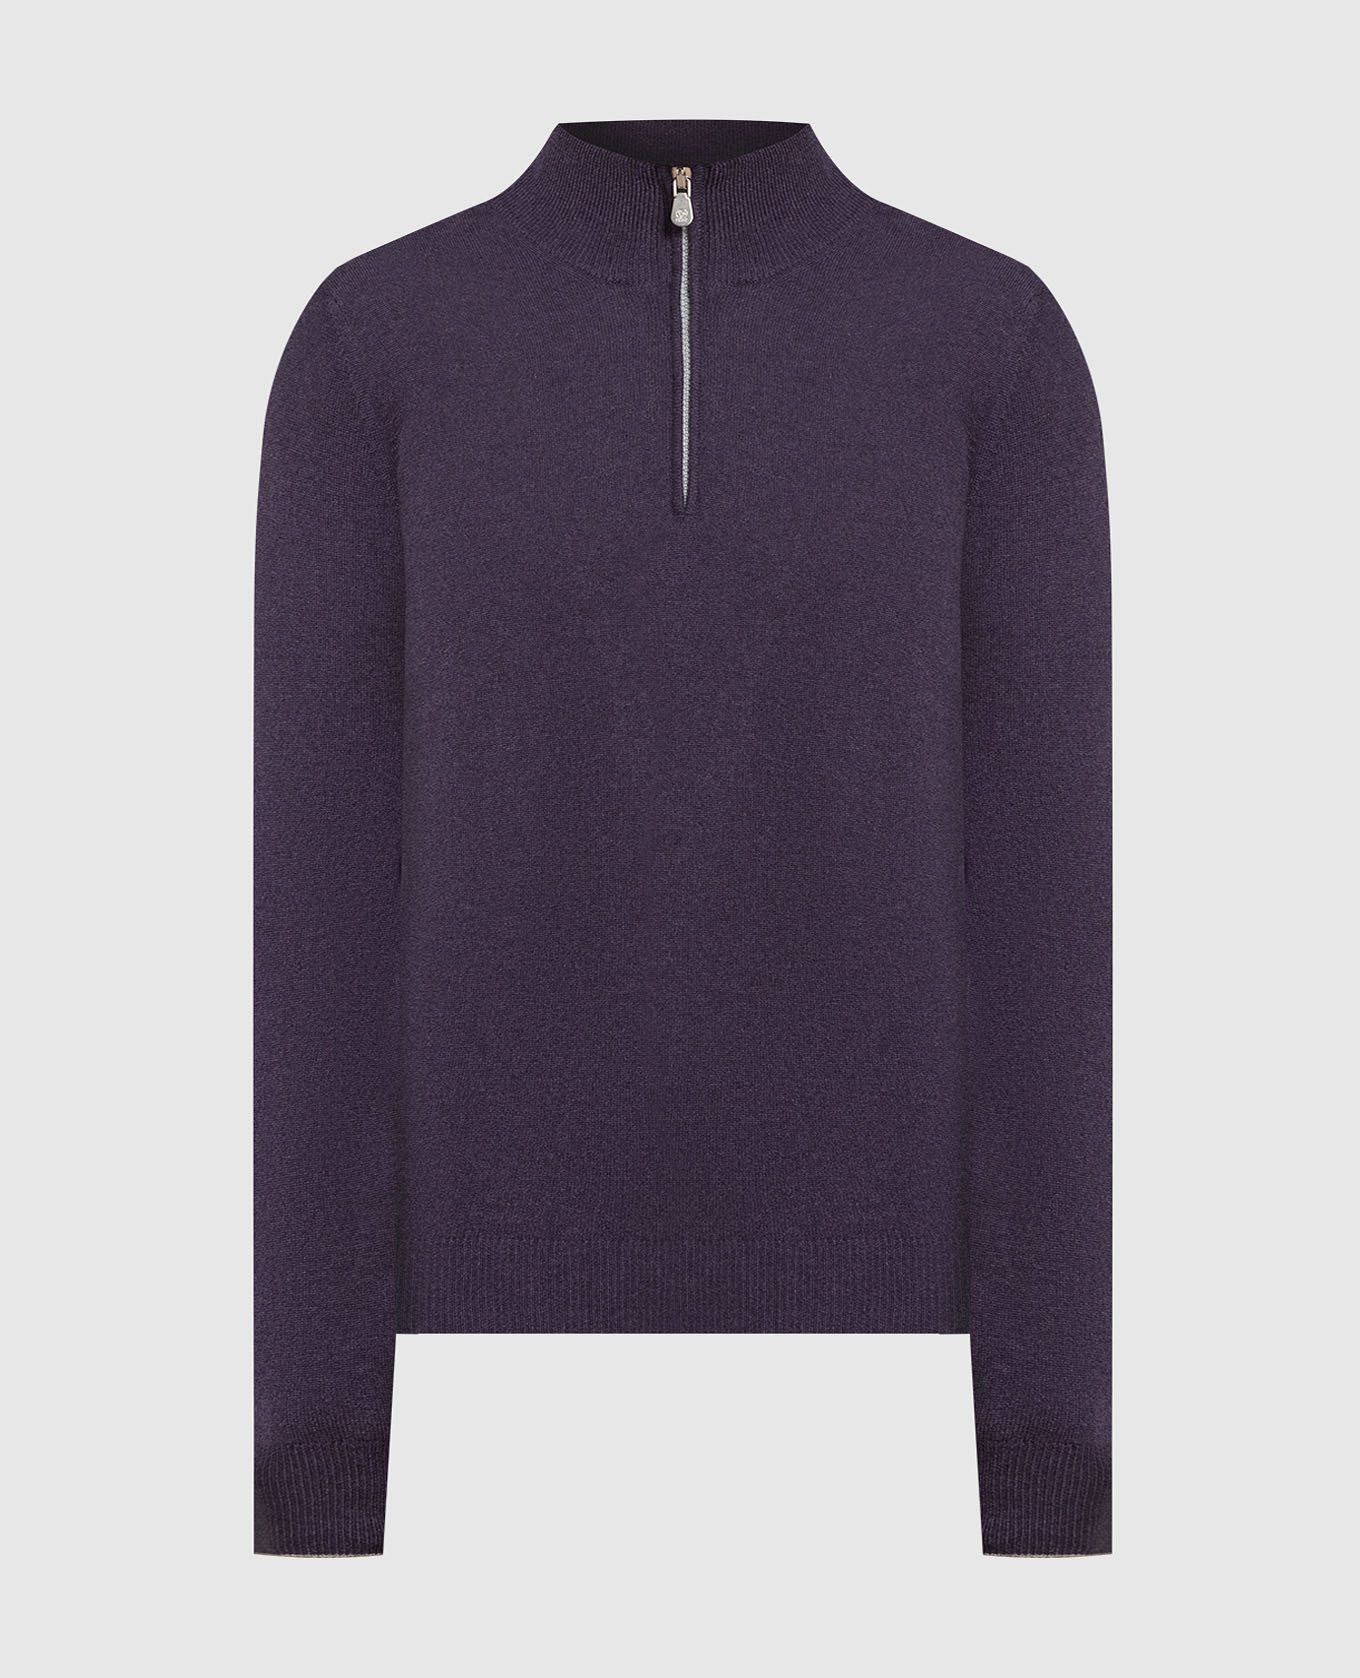 Purple cashmere jumper